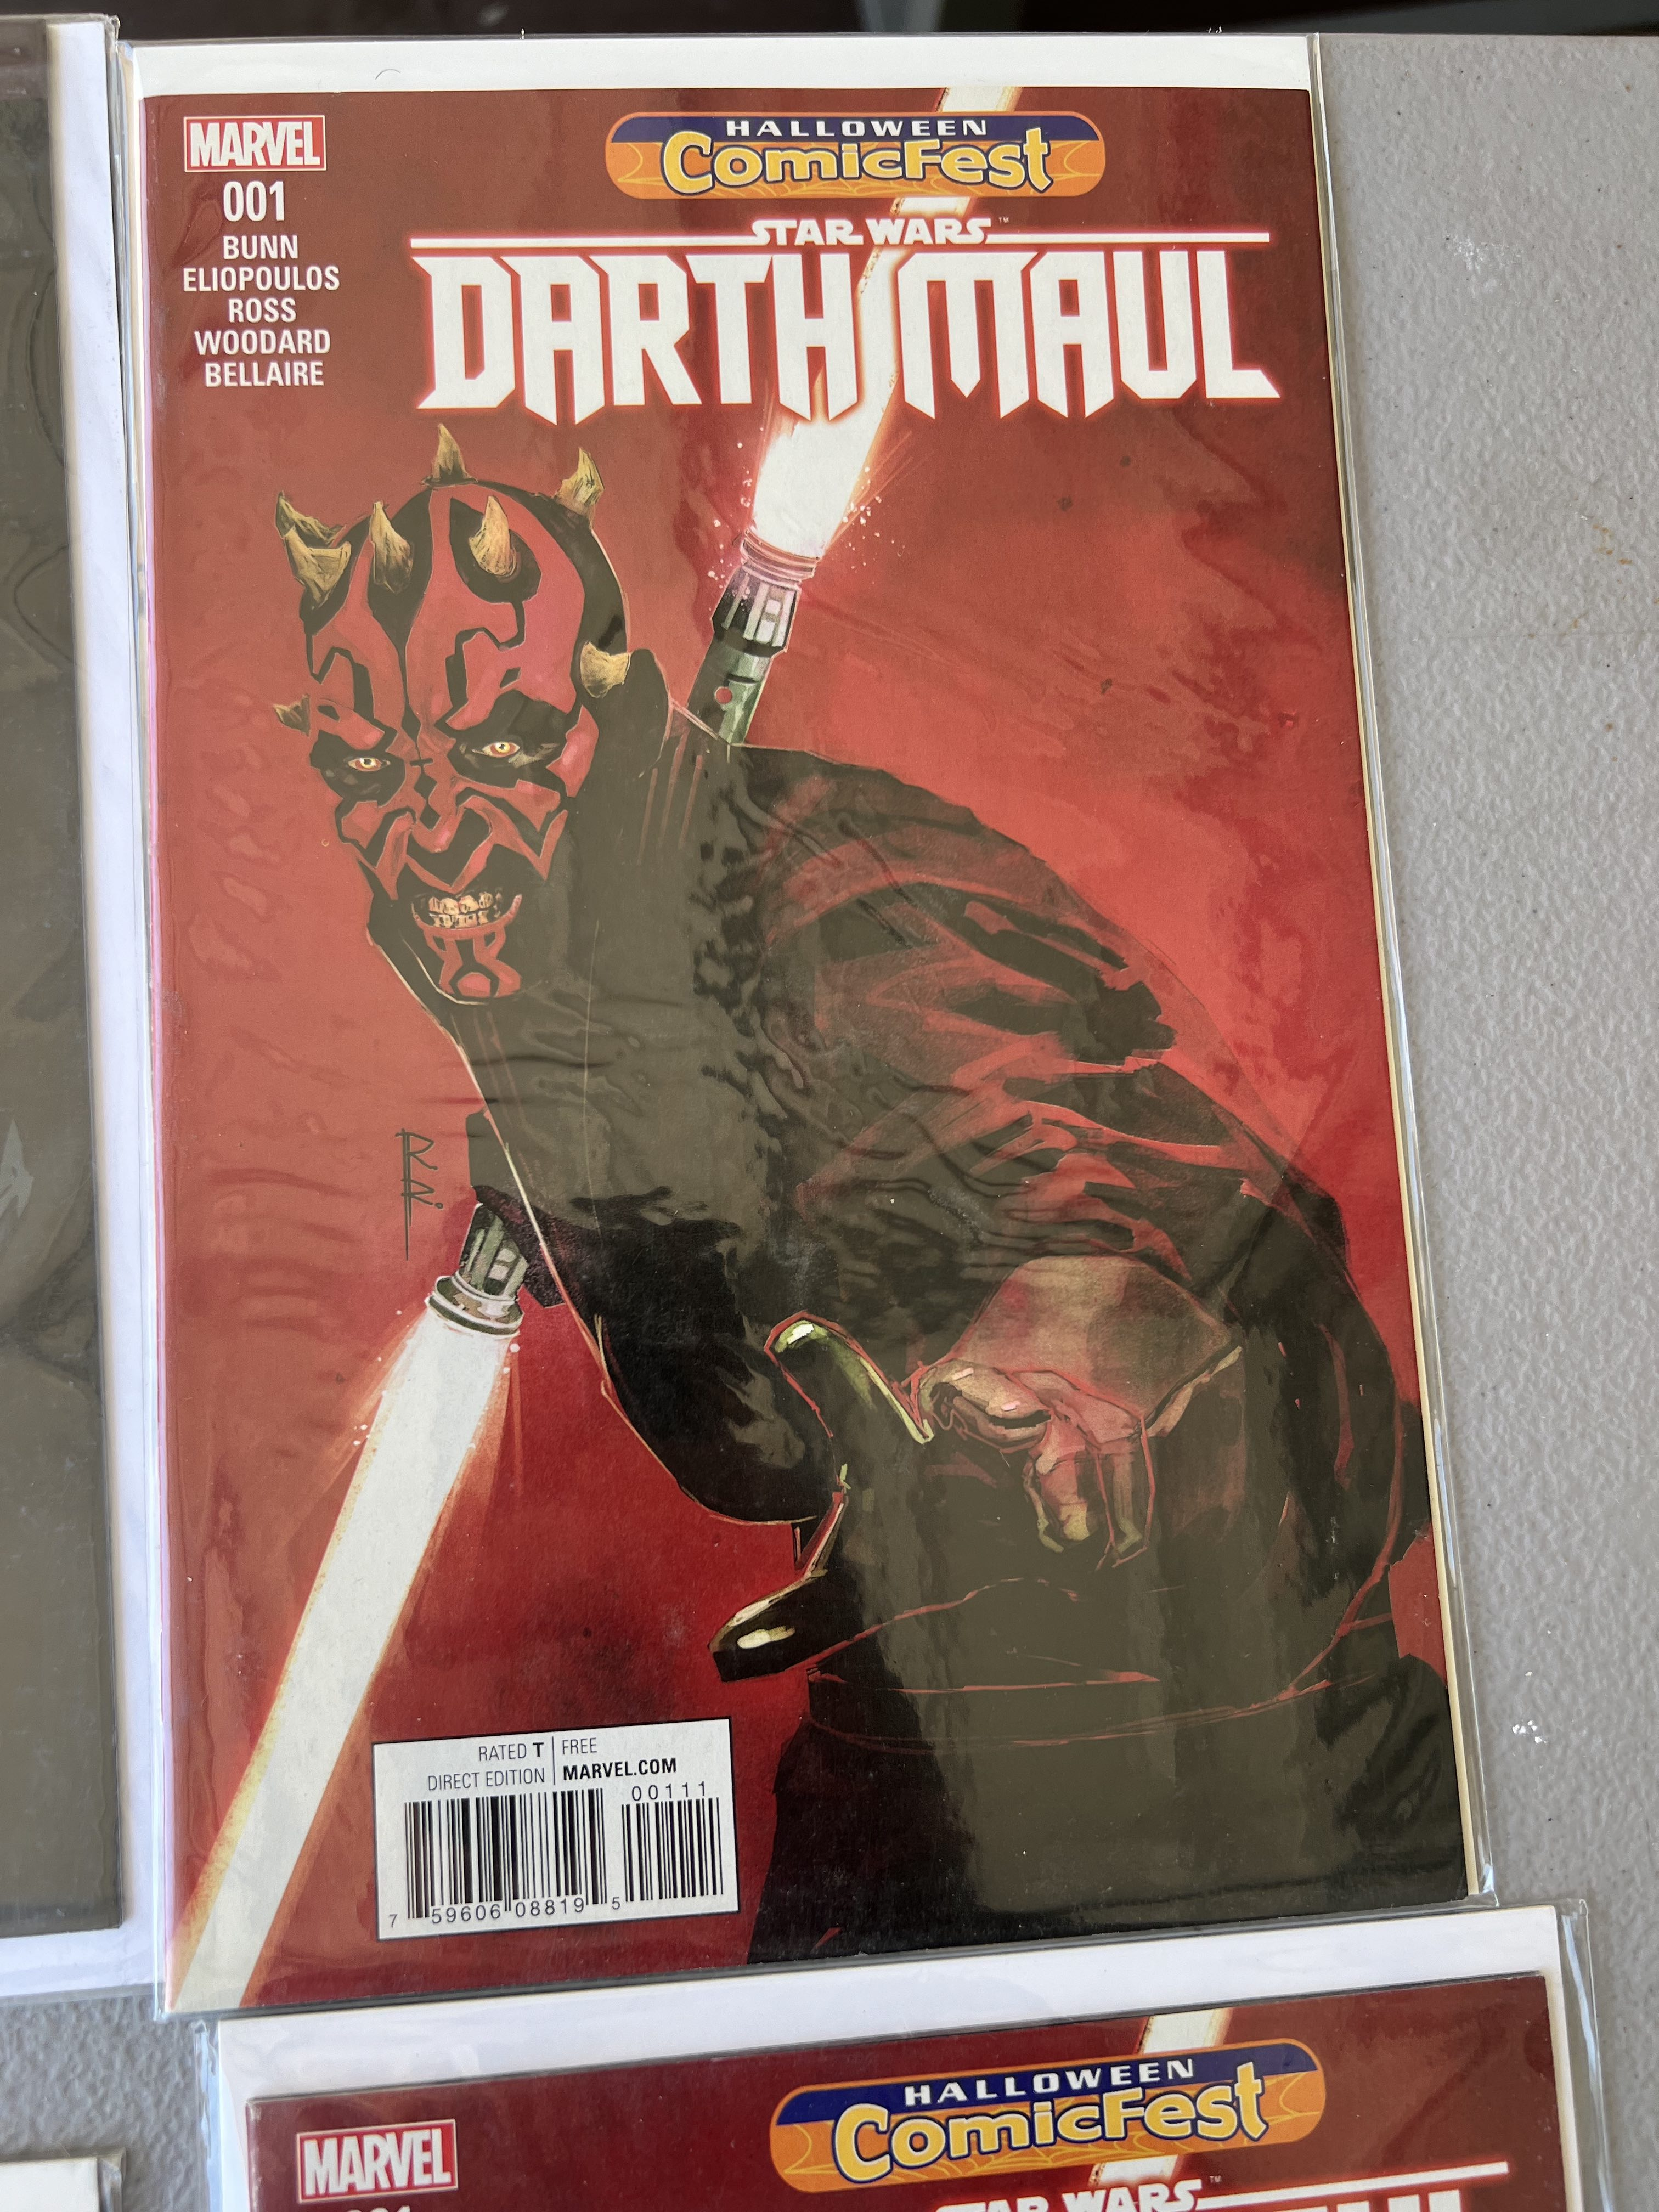 Comic Book Star Wars Ddoctor APHRA, Darthmaul Hell Boy